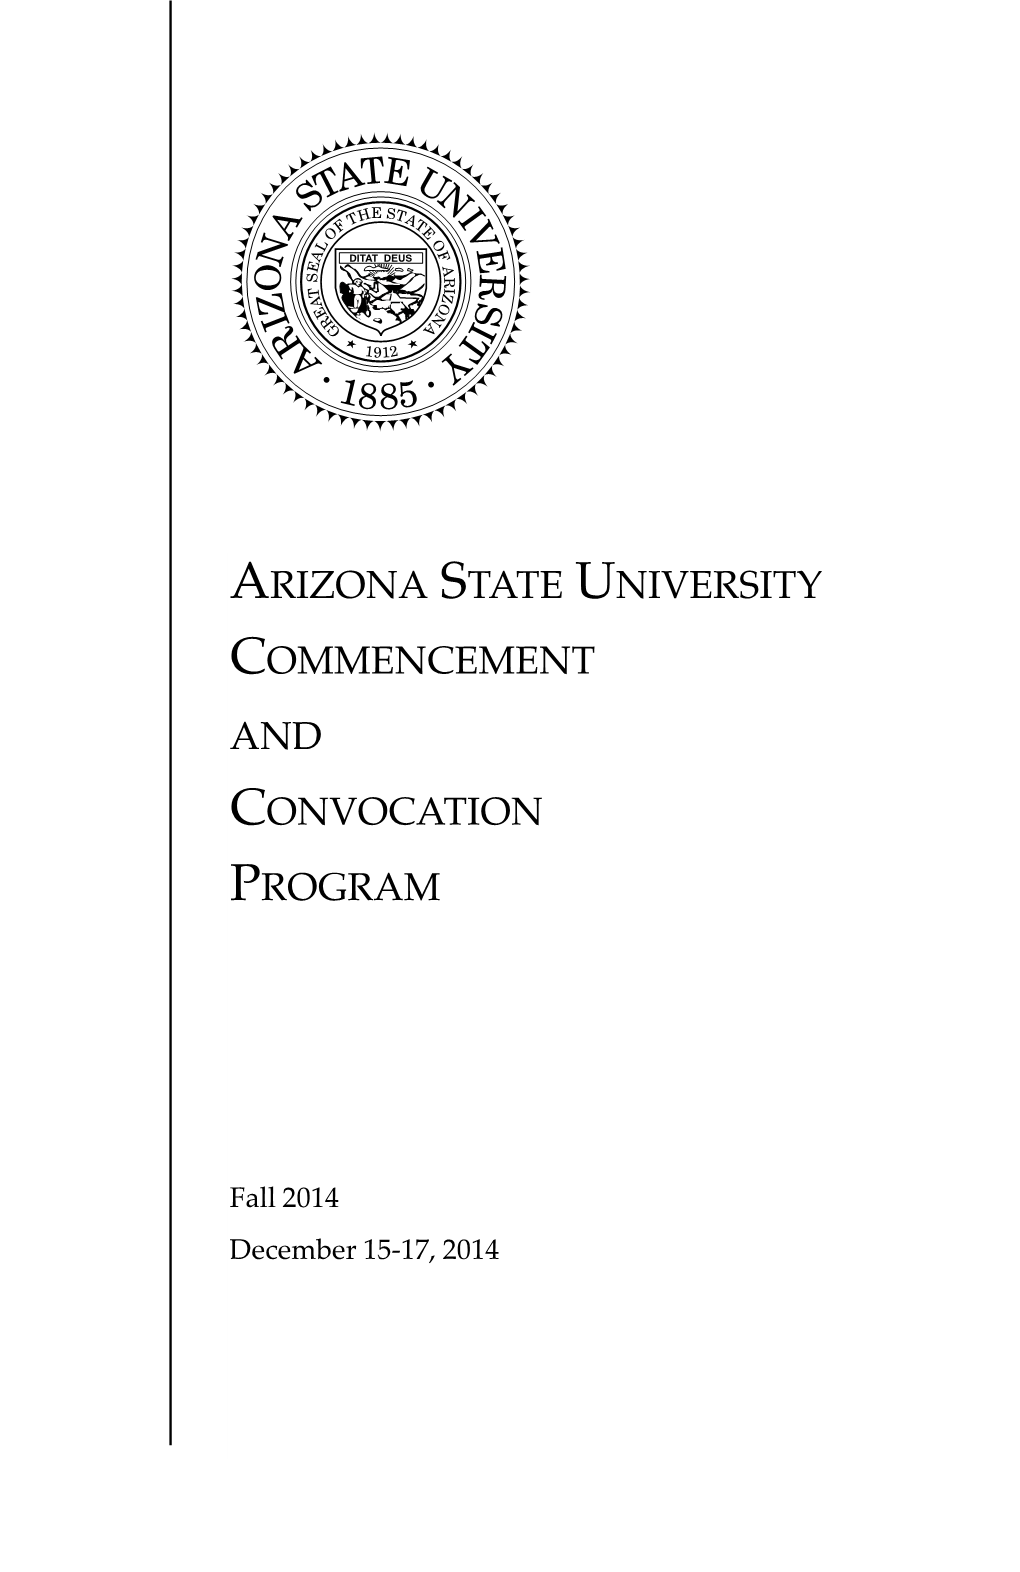 Fall 2014 Commencement Program